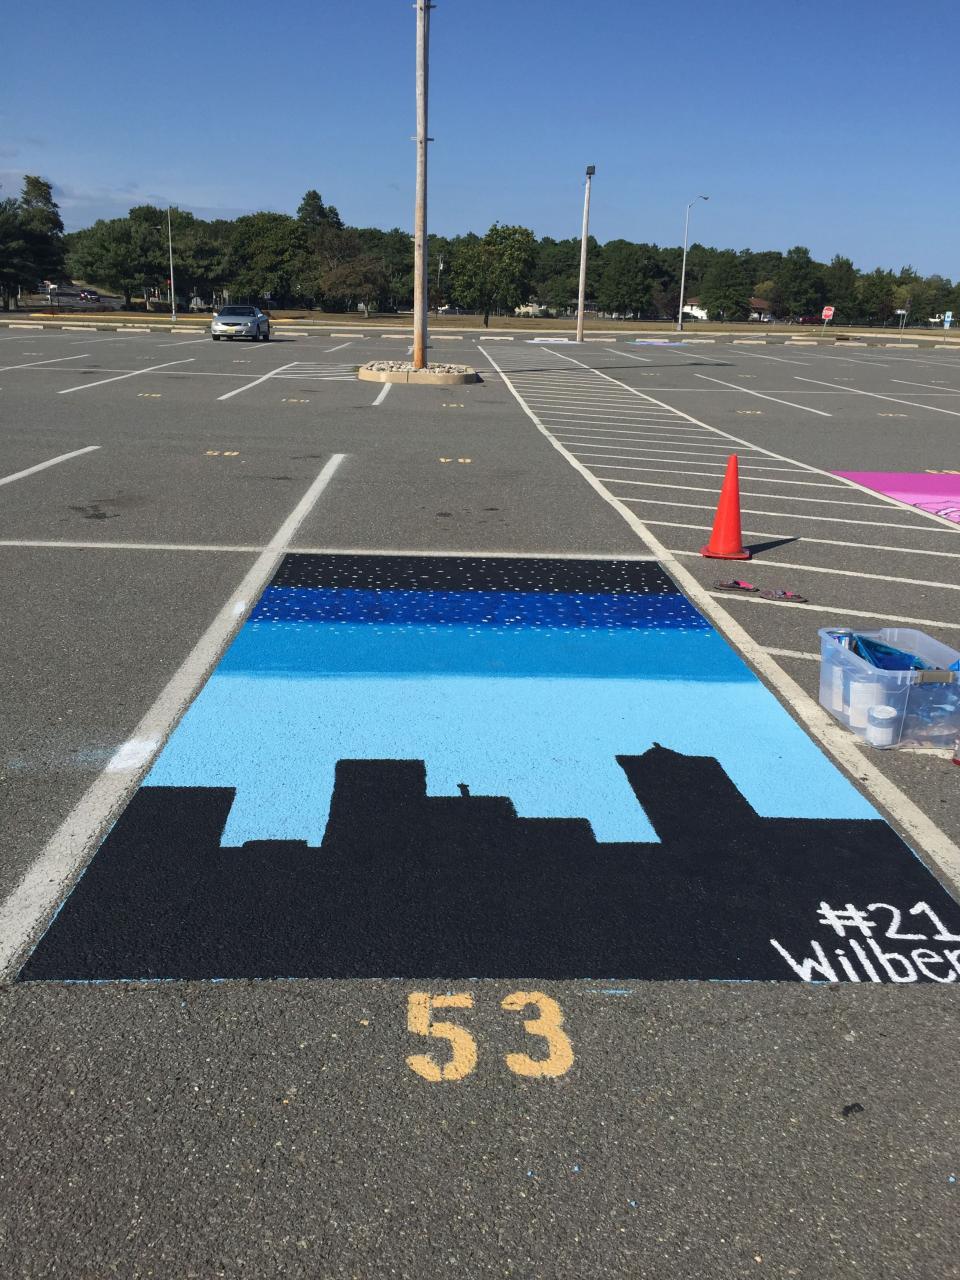 senior year painted parking spot | Parking spot painting, Parking lot painting, Parking spot